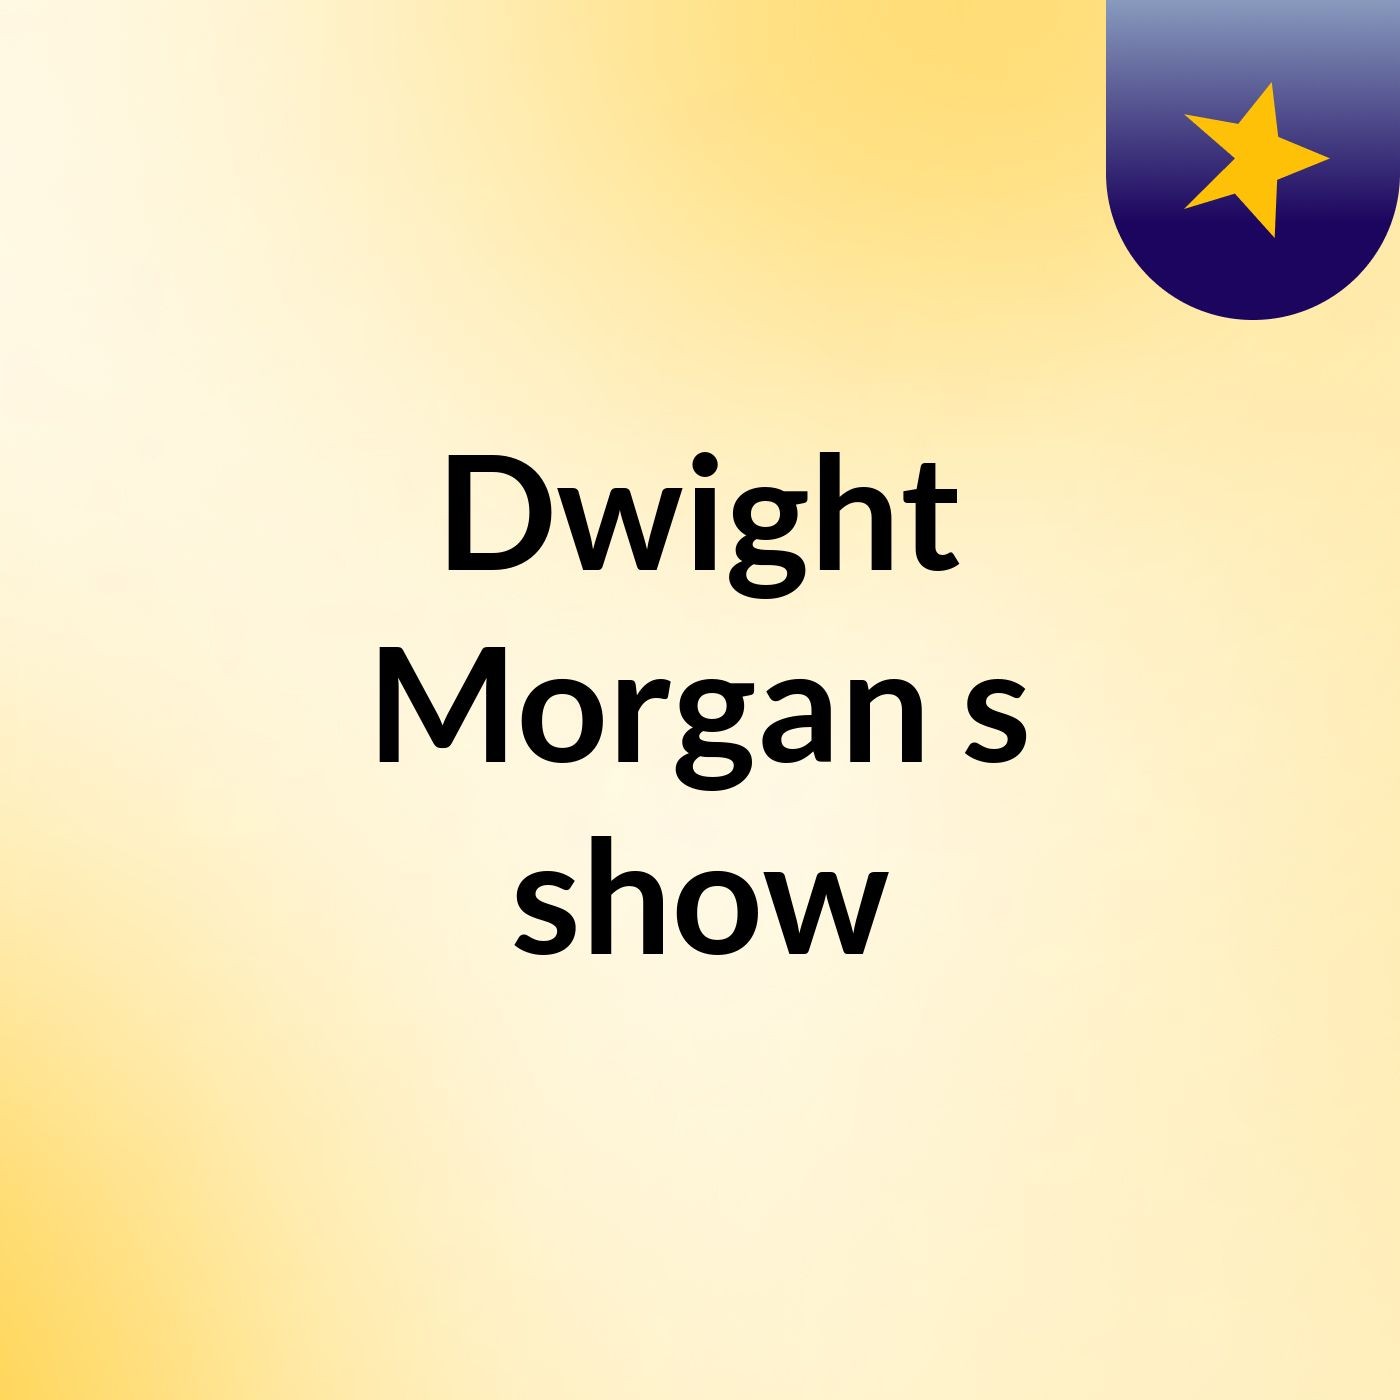 Dwight Morgan's show